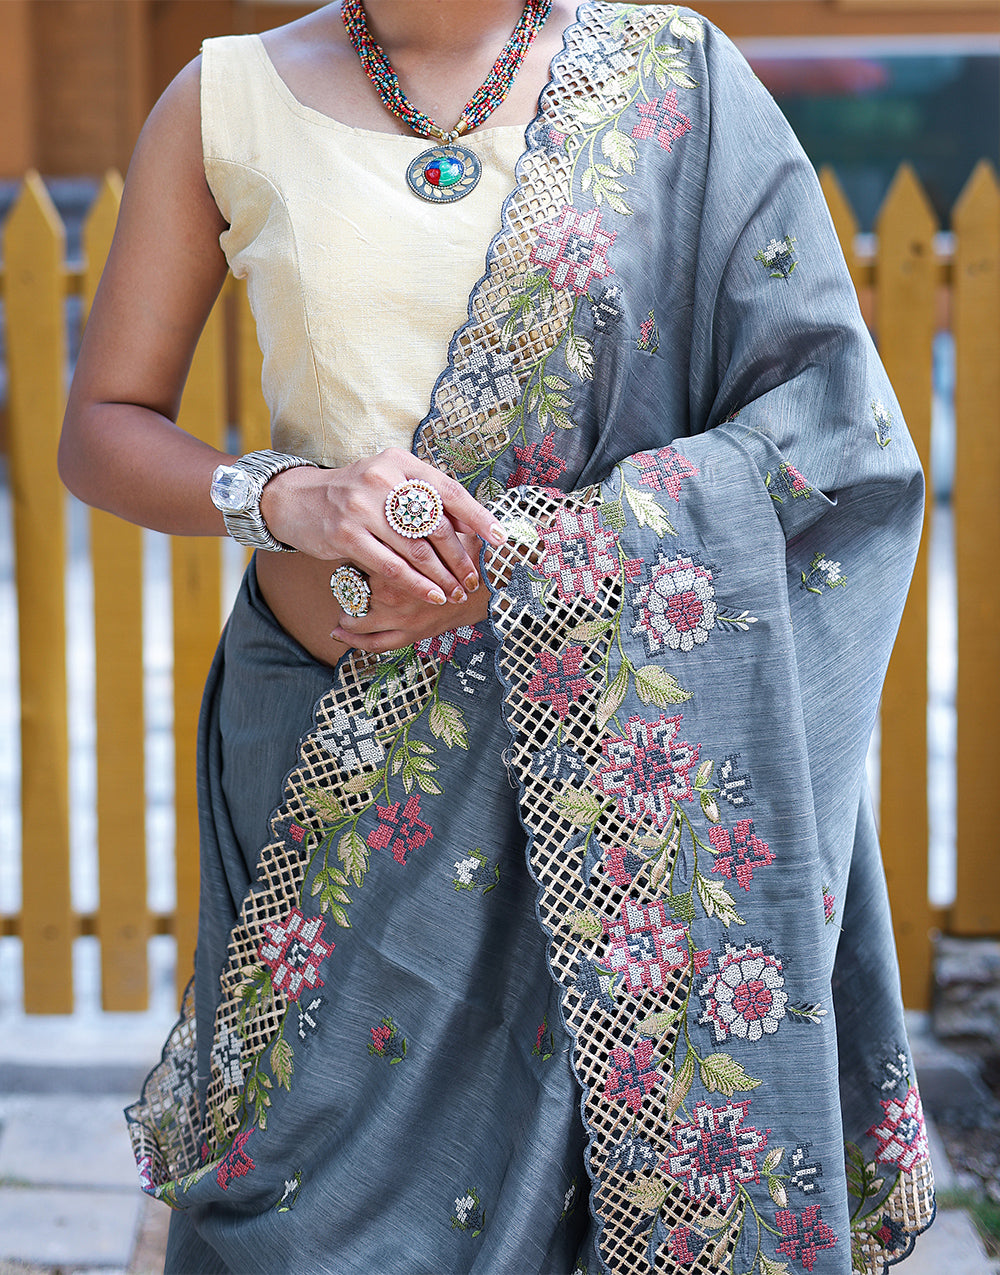 Grey Silk Saree With Embroidery Work